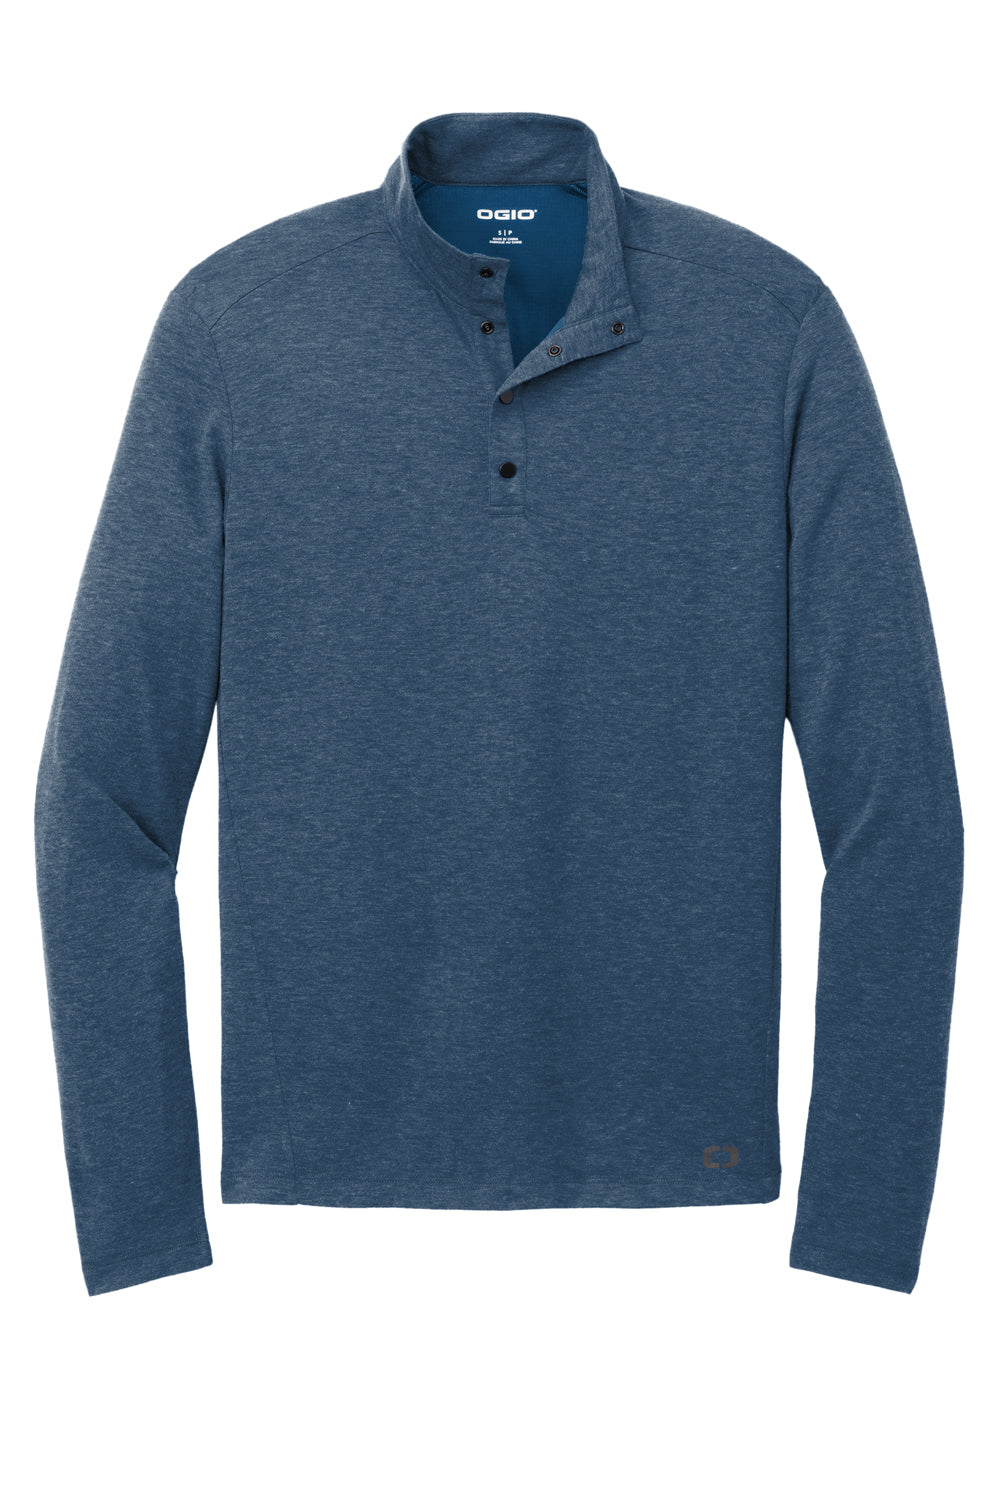 Ogio Mens Command 1/4 Snap Sweater Spar Blue Flat Front